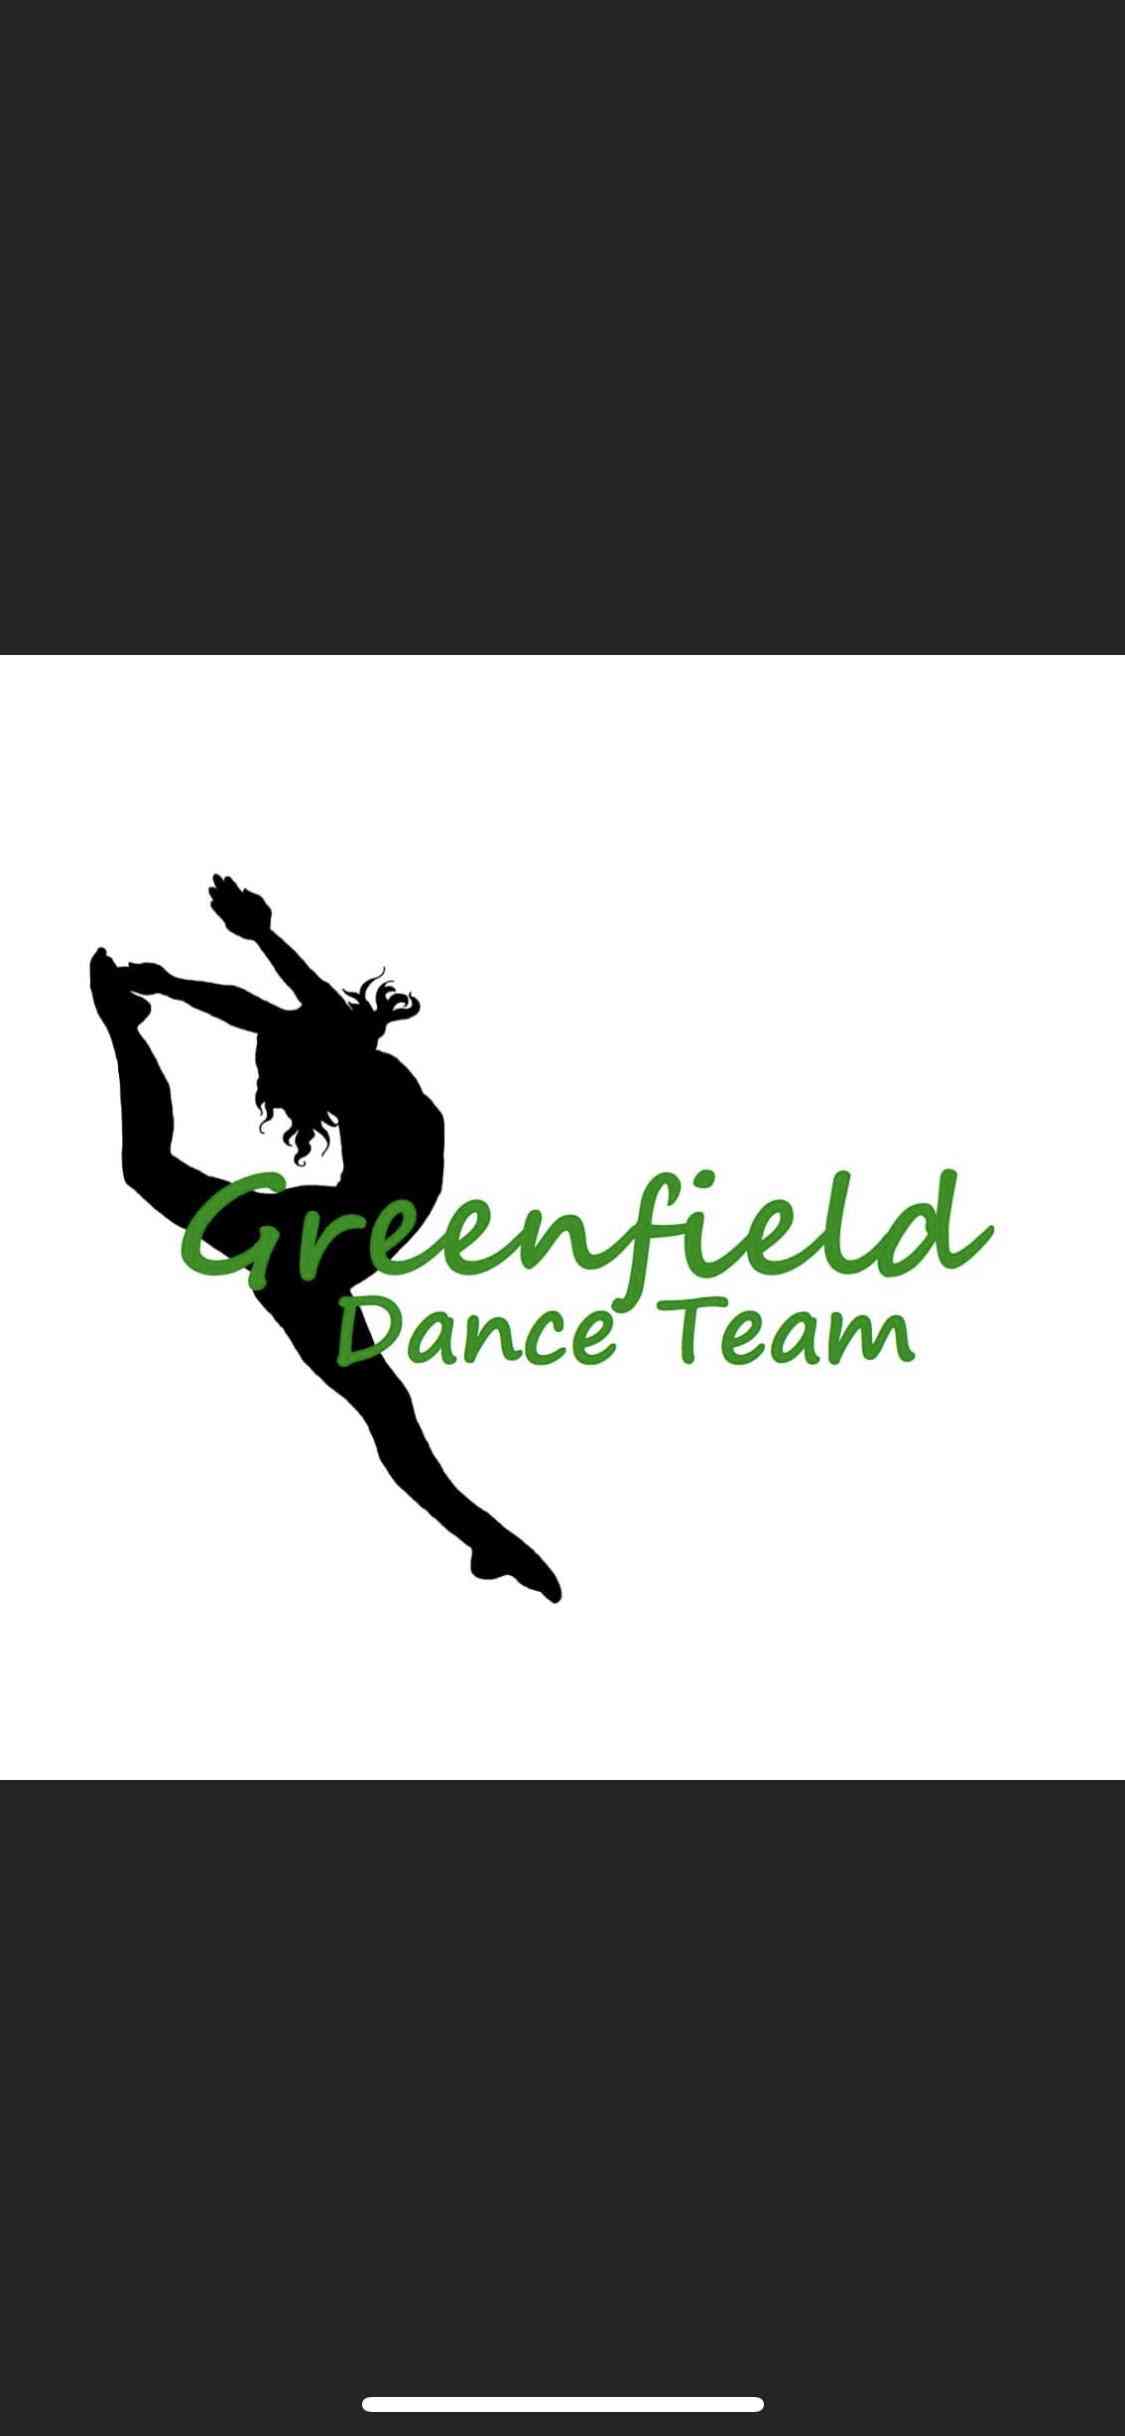 Greenfield High School Dance Team Image